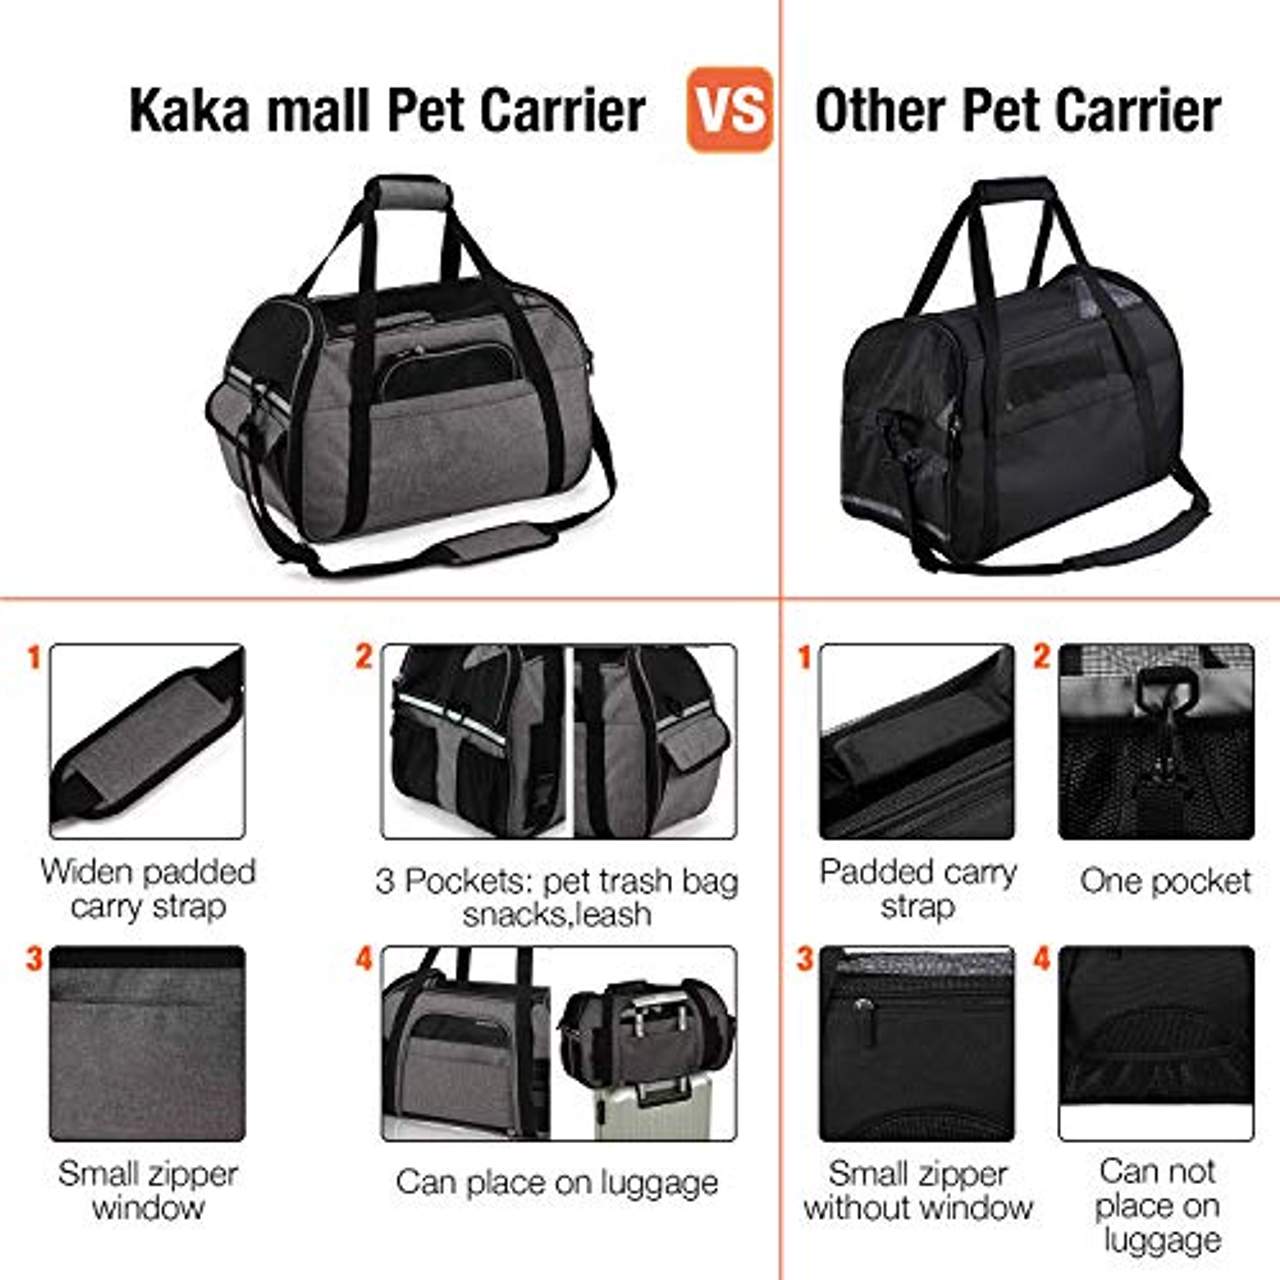 Kaka mall Transporttasche für Katzen Hunde Comfort Fluggesellschaft zugelassen Travel